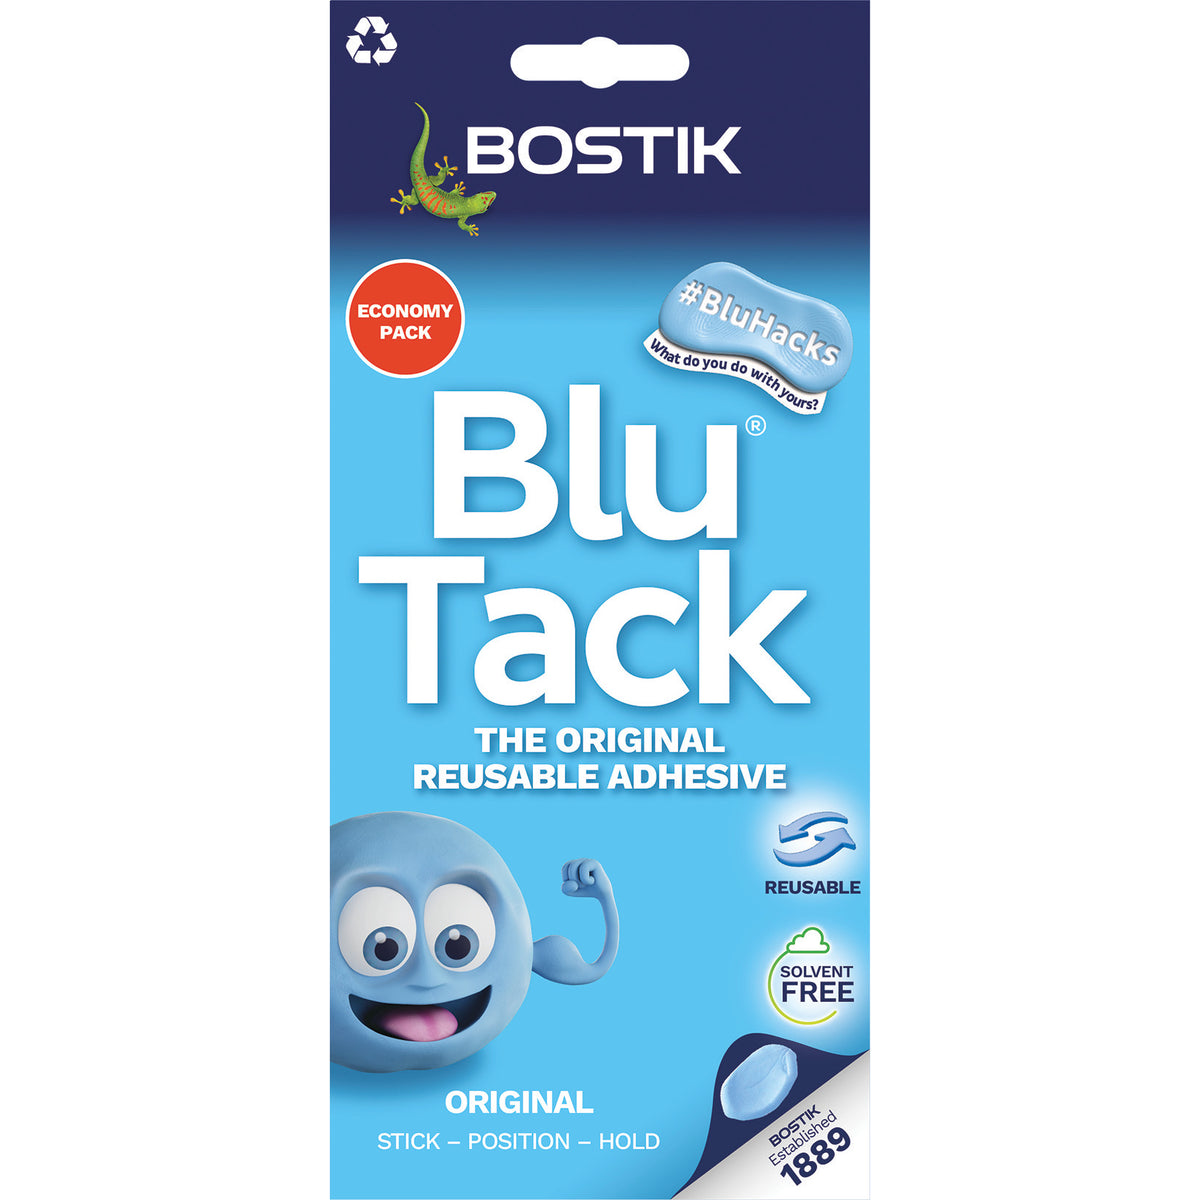 Blu Tack from Bostik